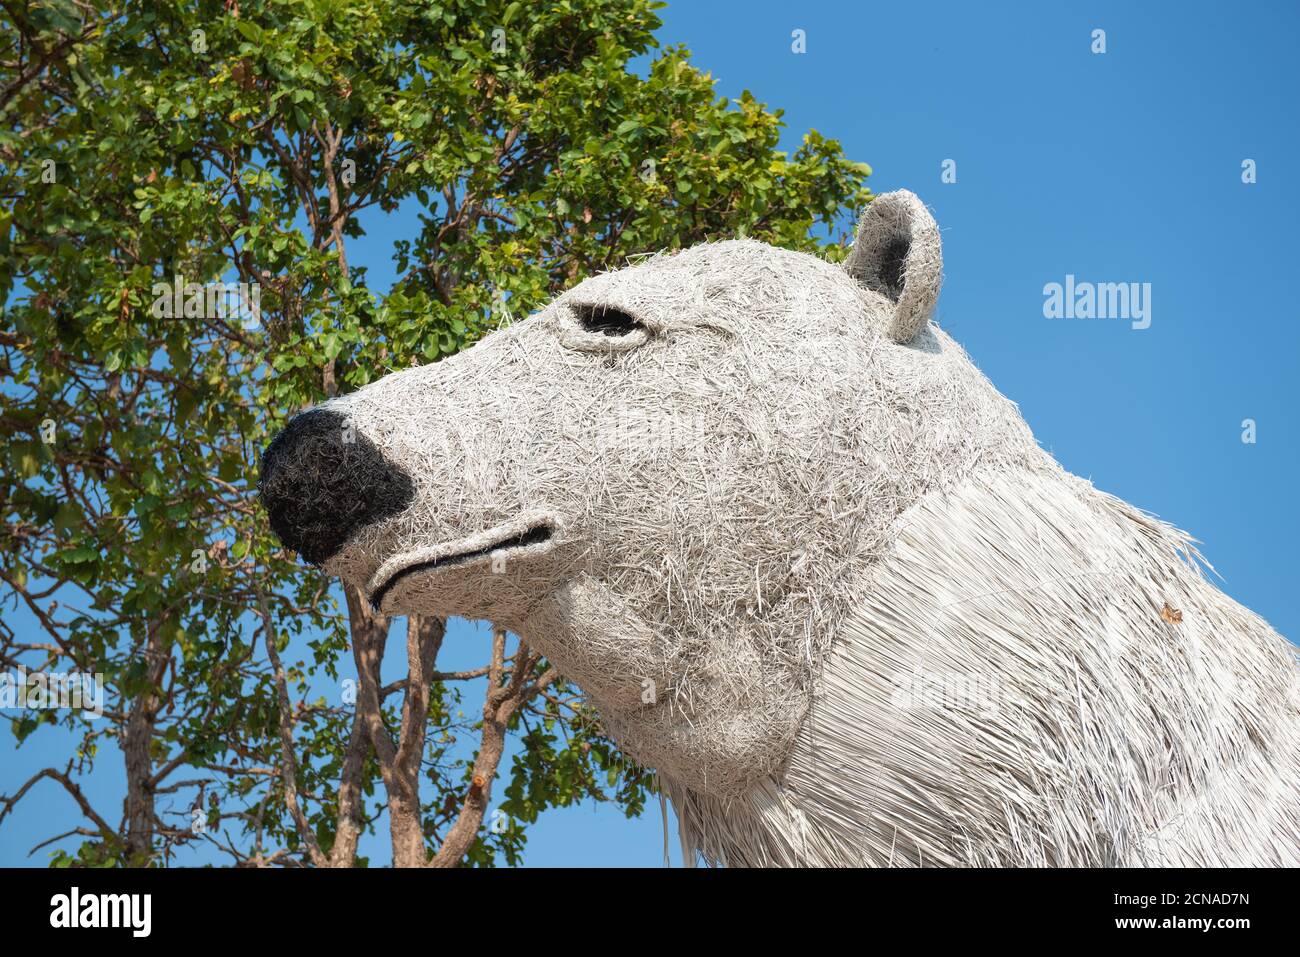 White bear statue made of straw. Stock Photo